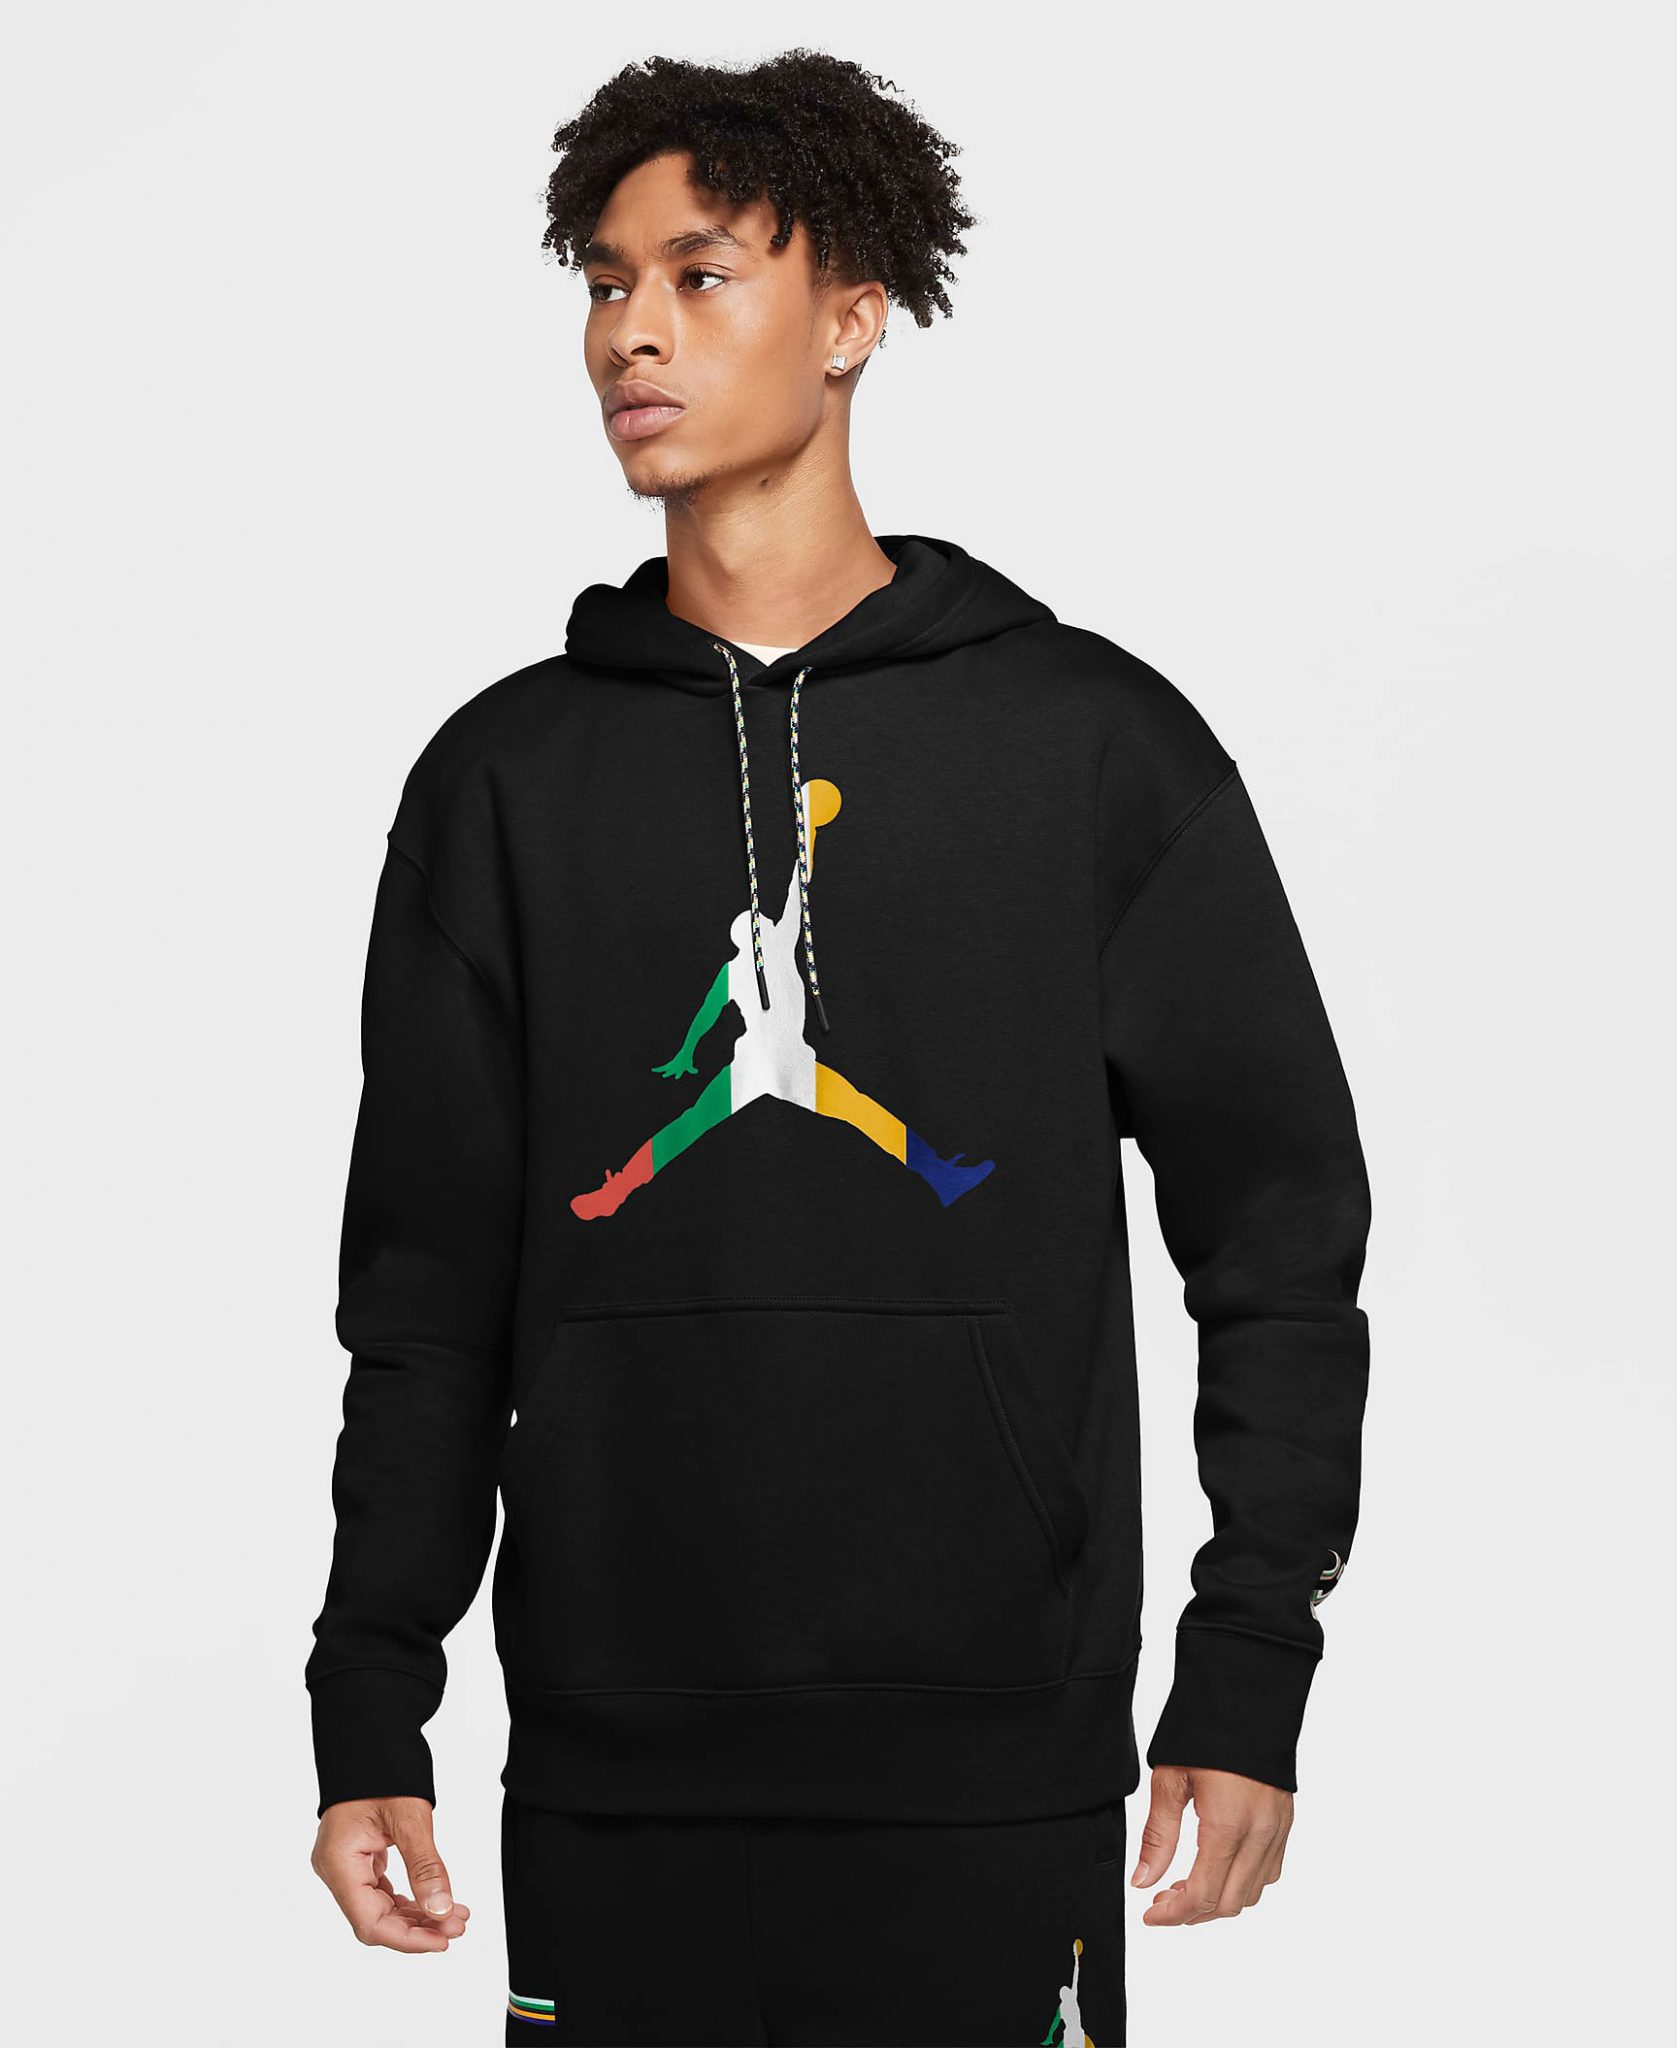 Air Jordan 5 What The Hoodies to Match | SneakerFits.com